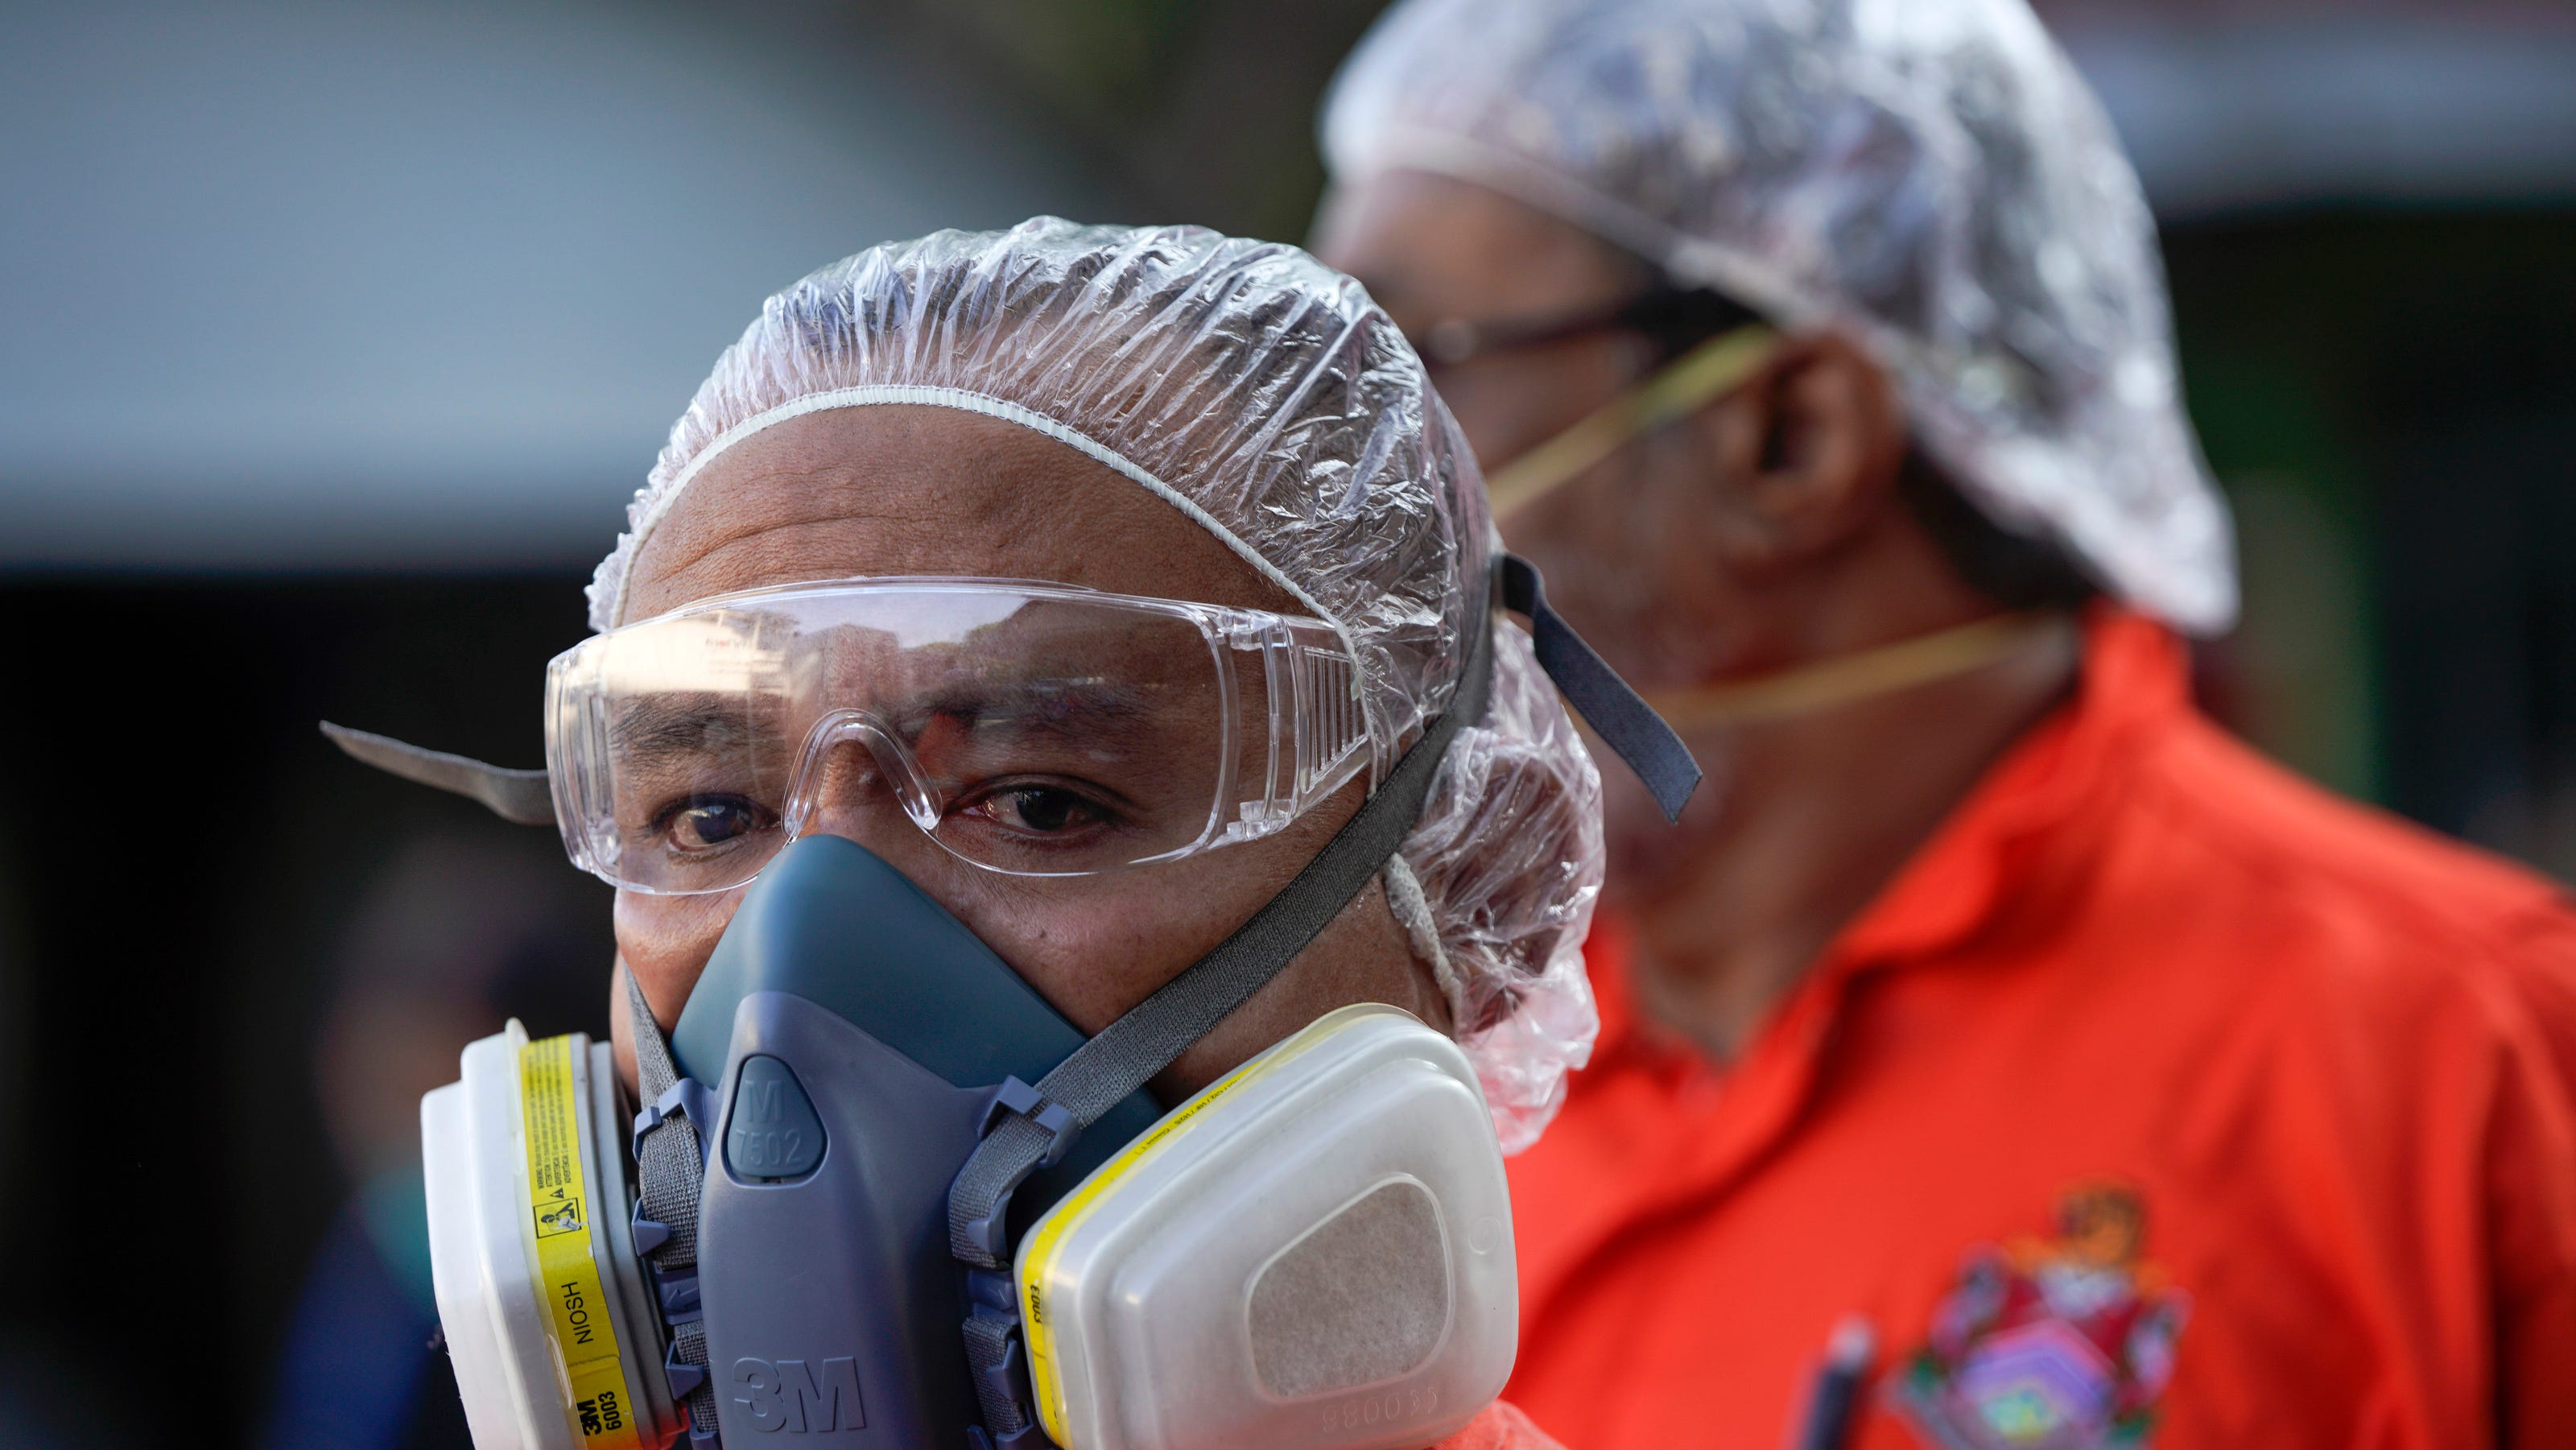 Coronavirus U.S. stocked N95 face masks instead of reusable respirators